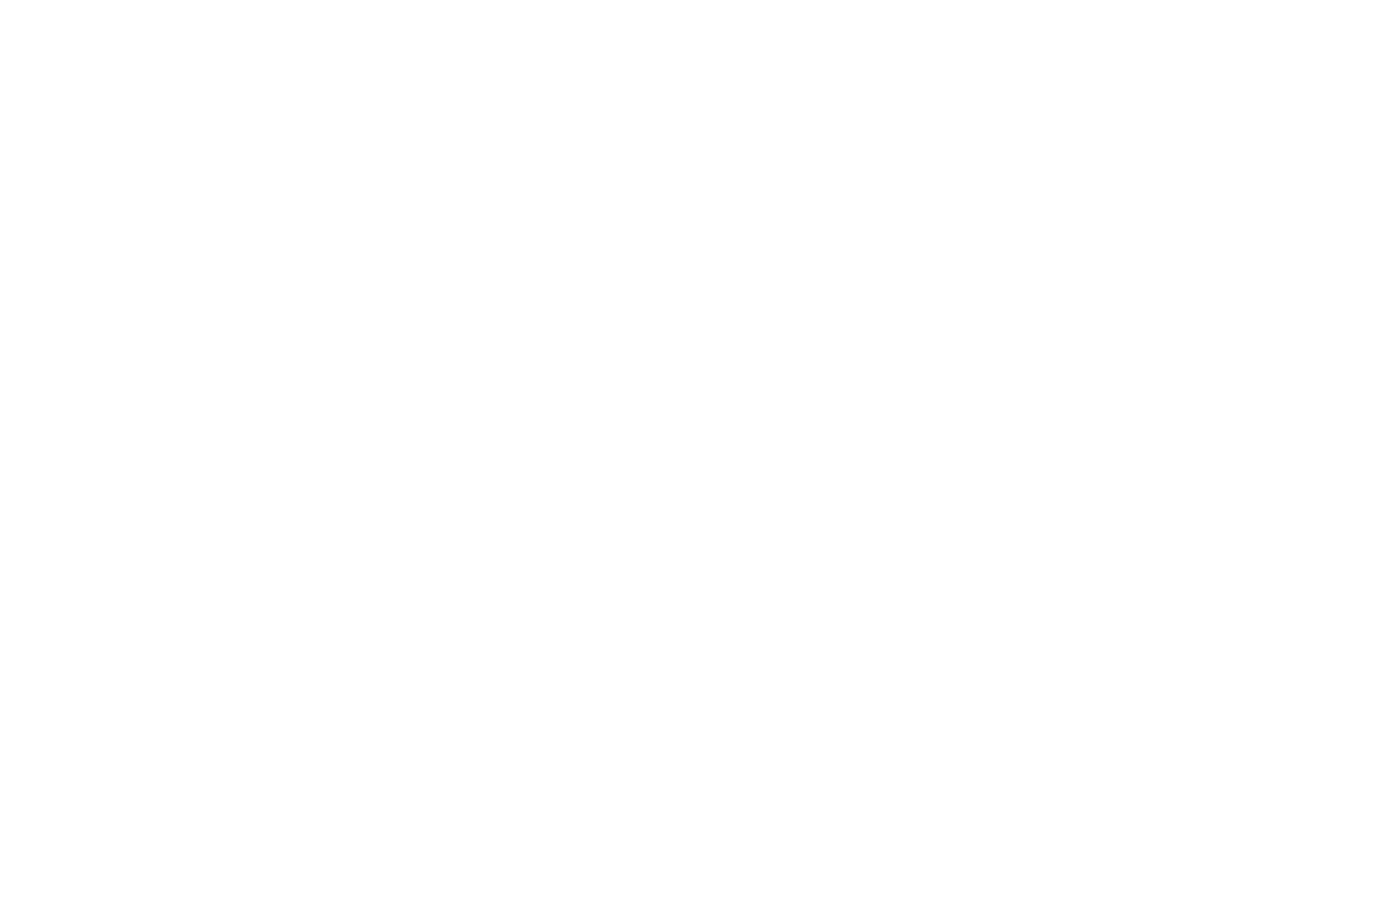 Glamour Hair Design